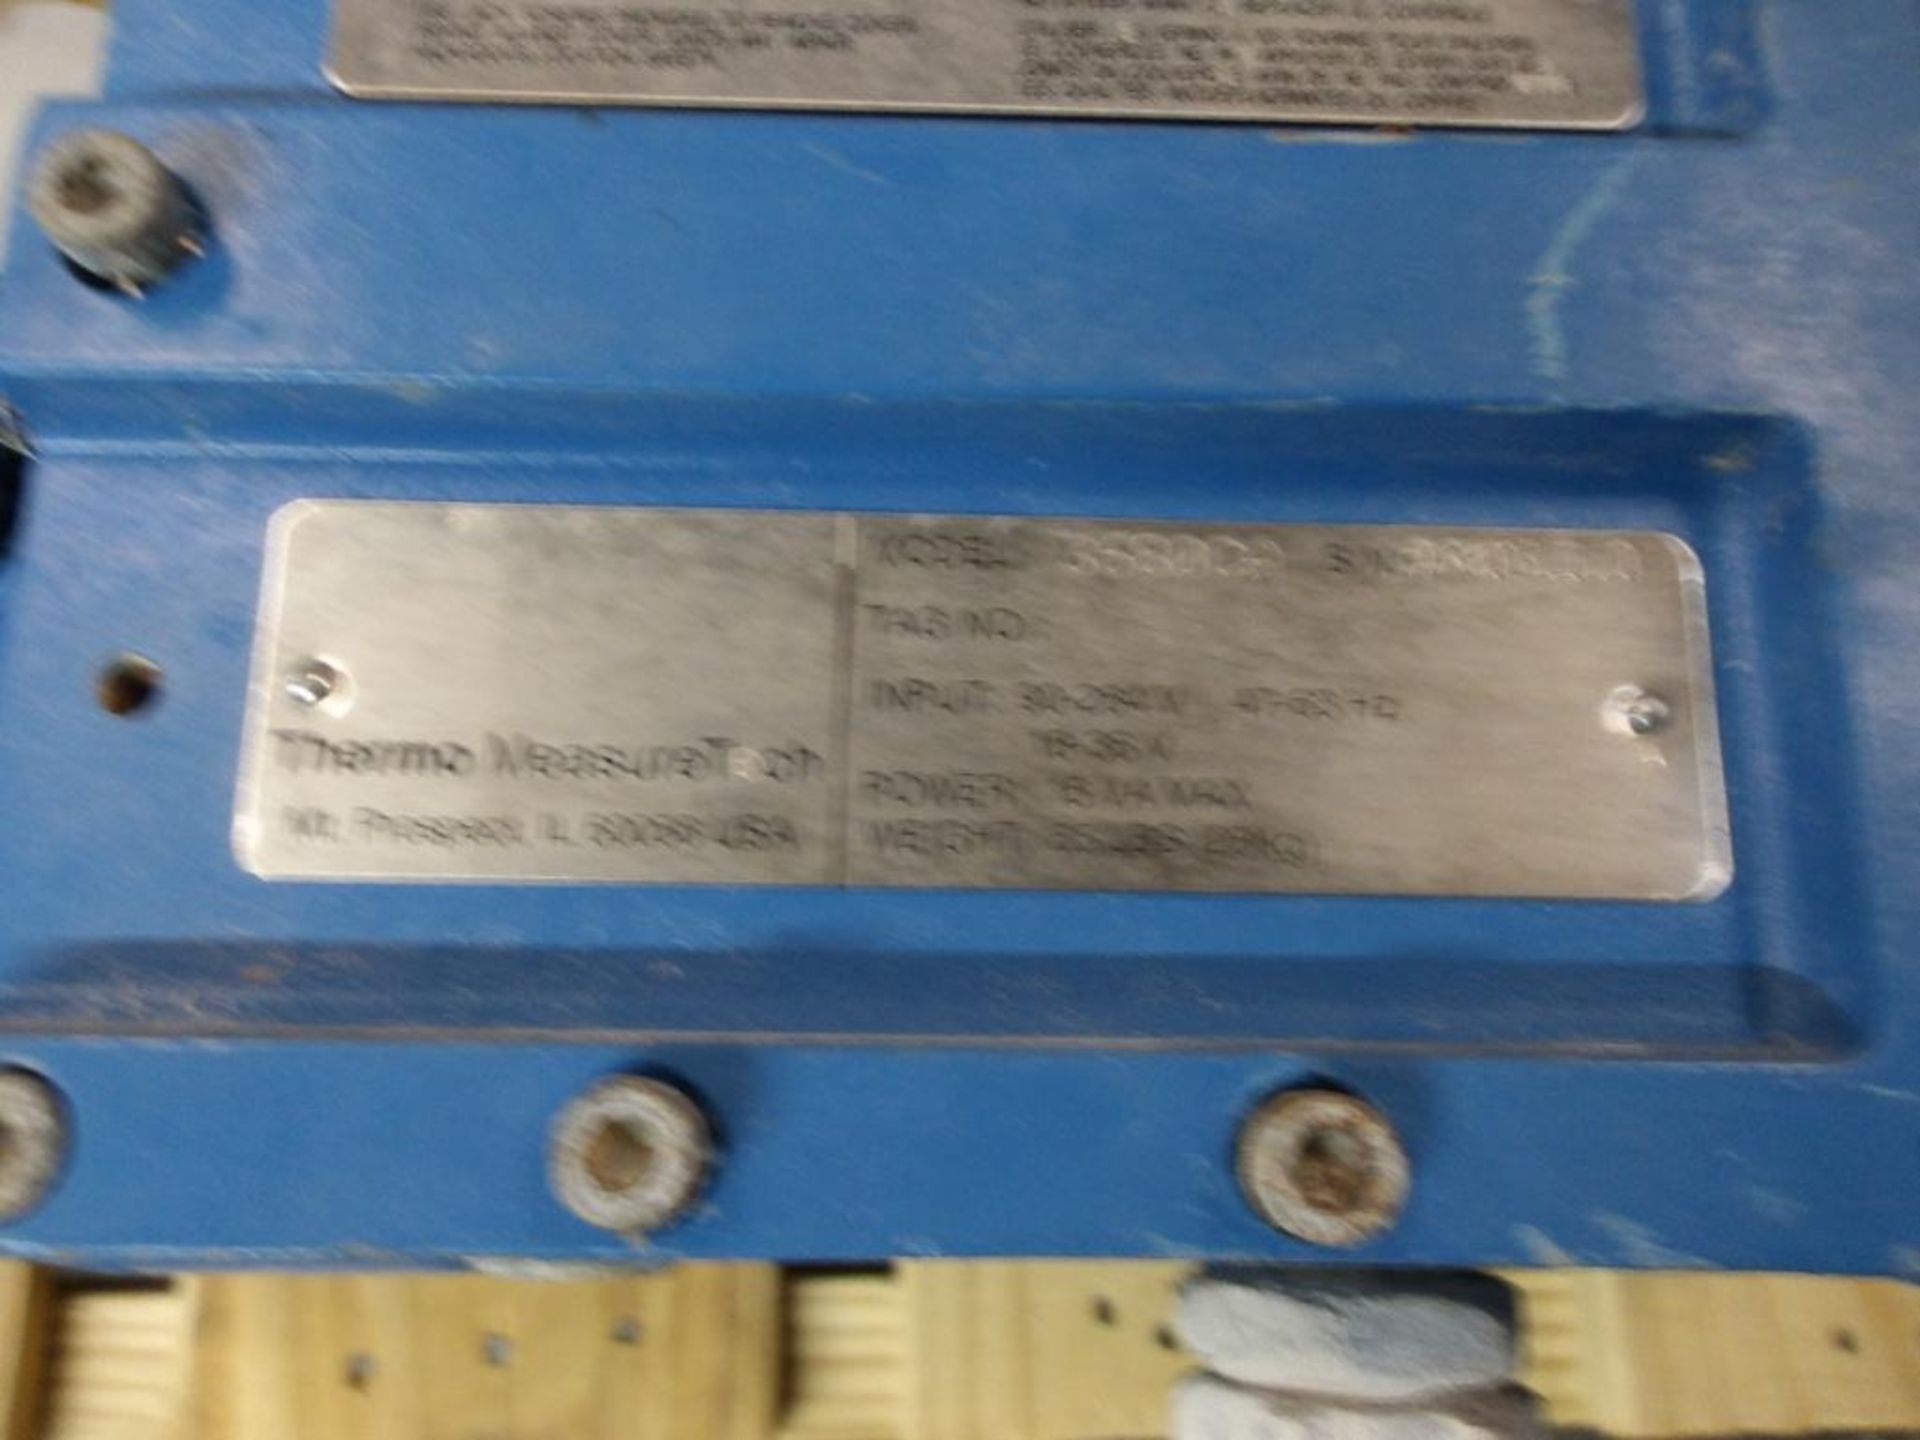 Valve & Transmitter, ITT Skotch, Size 4", Vent 2", Thermo MeasureTech (New & Used) - Image 4 of 5